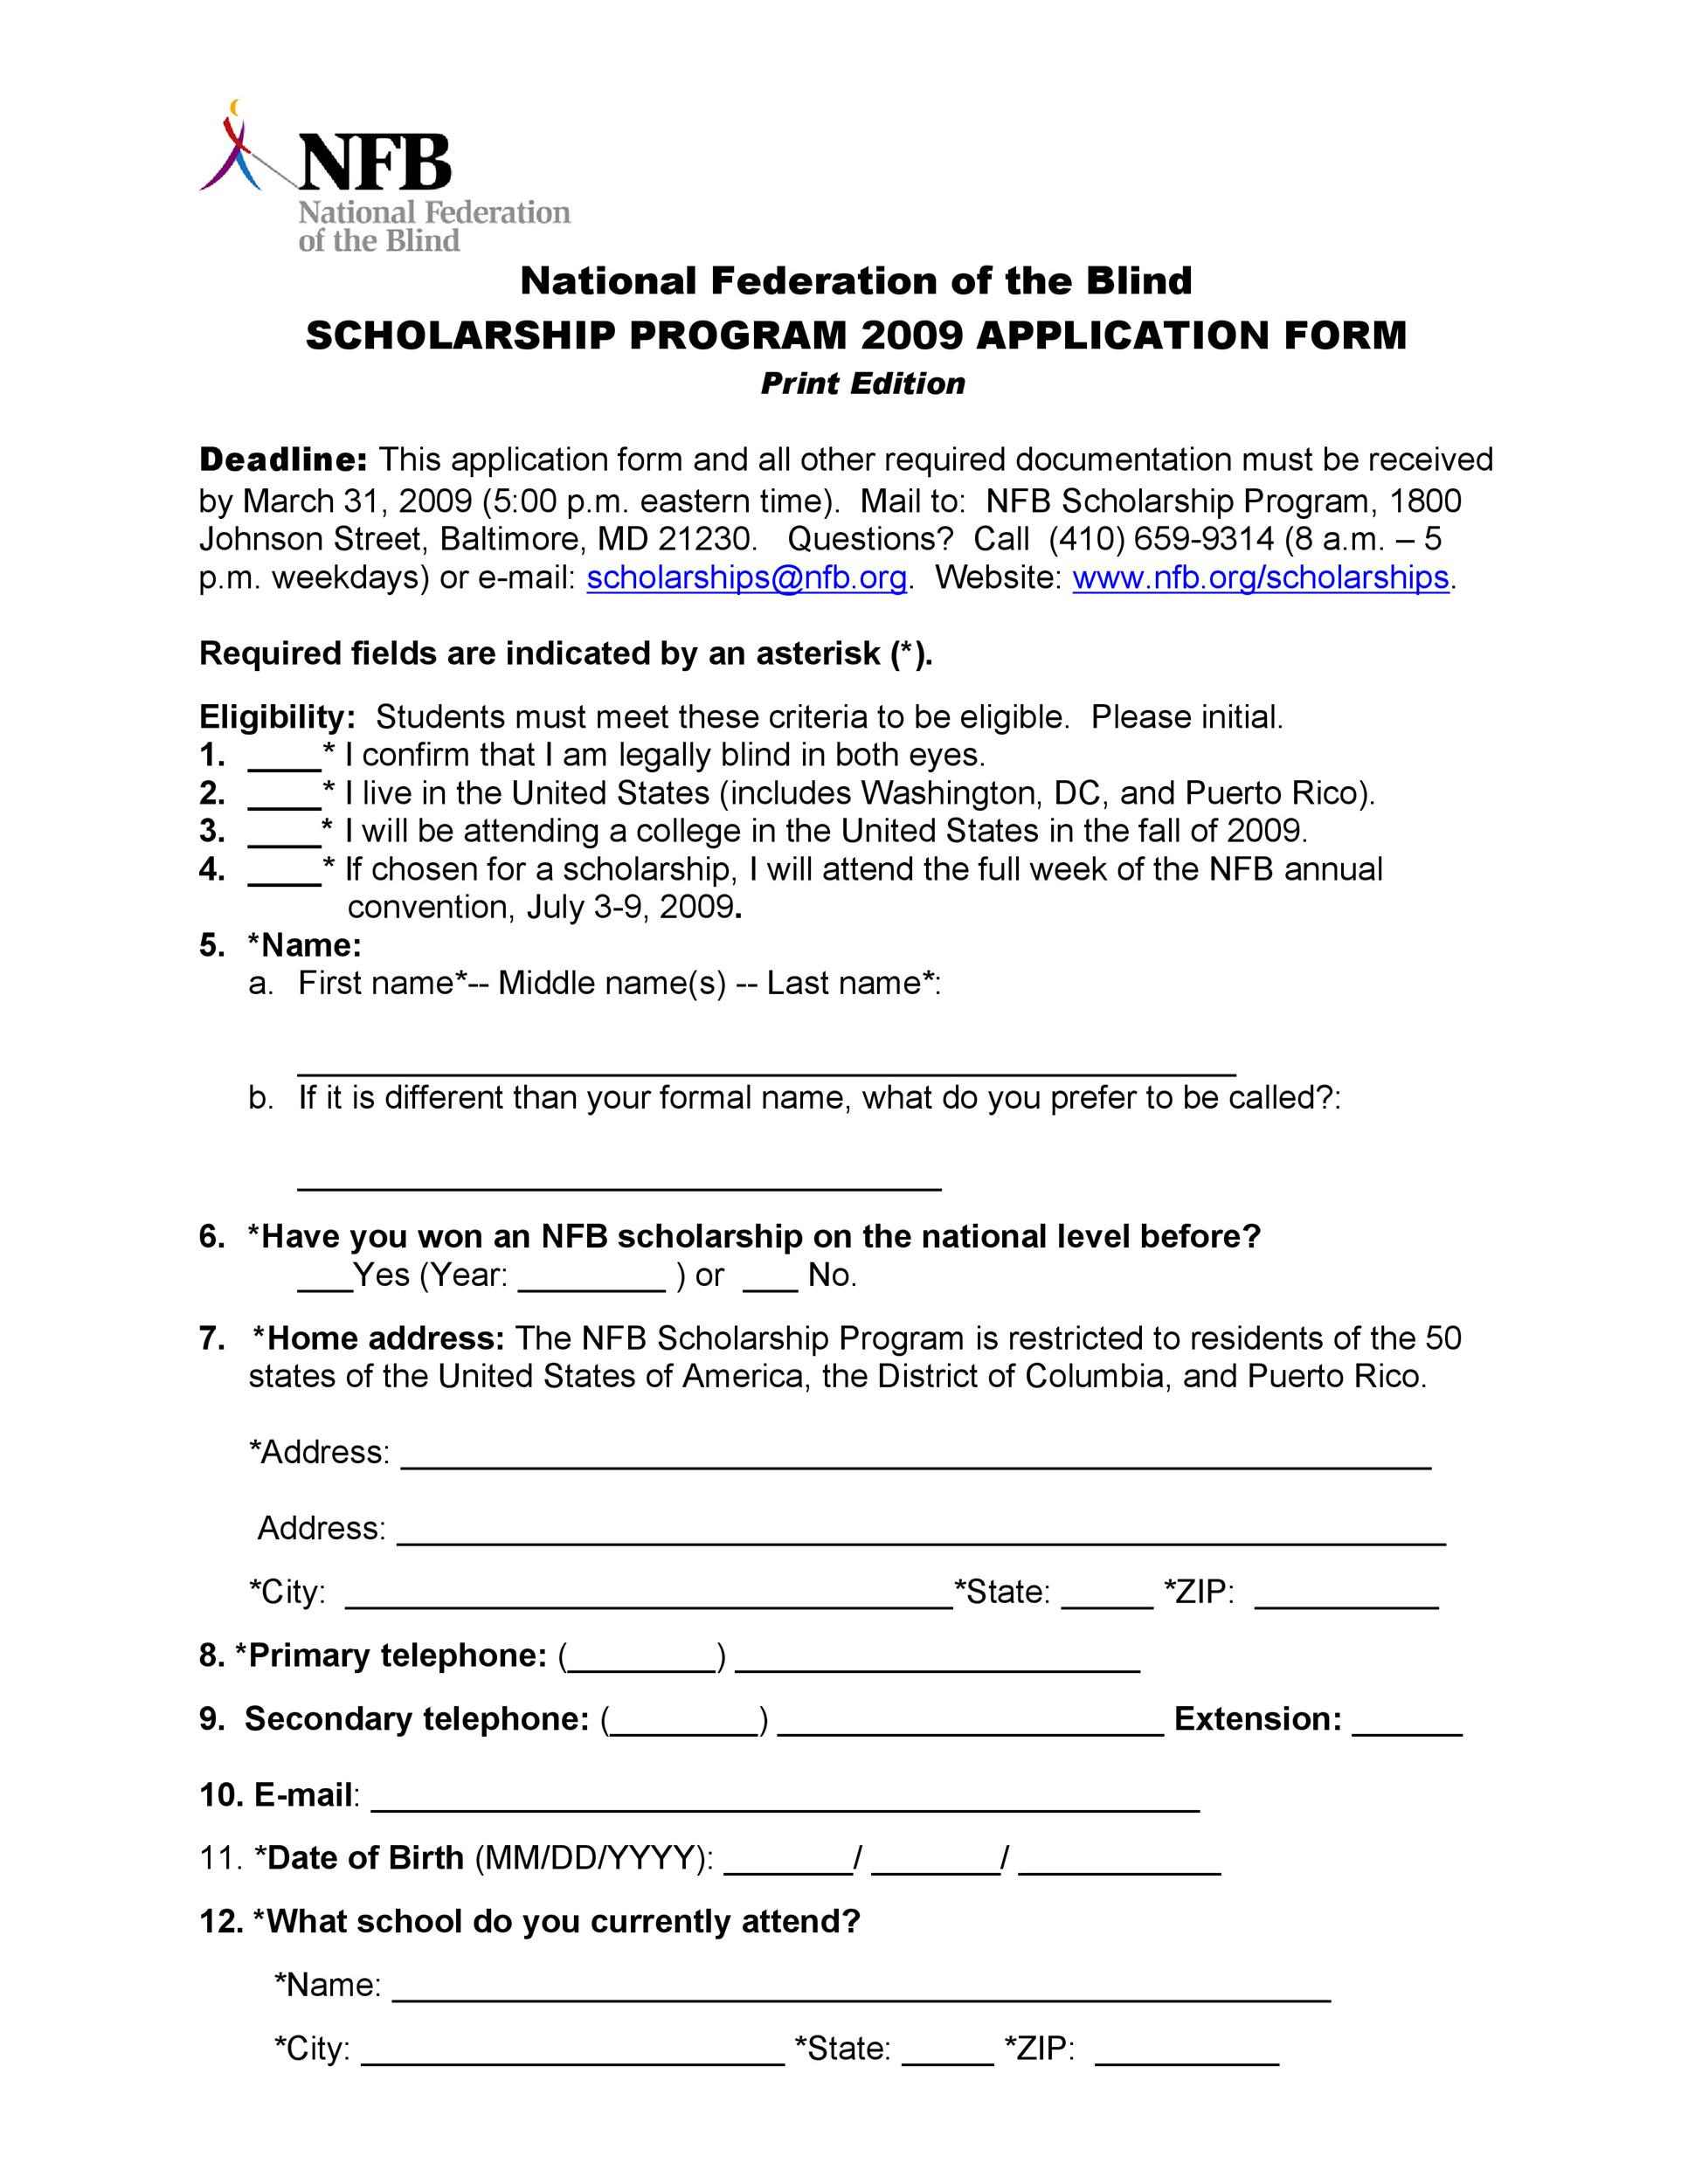 50 Free Scholarship Application Templates & Forms ᐅ TemplateLab